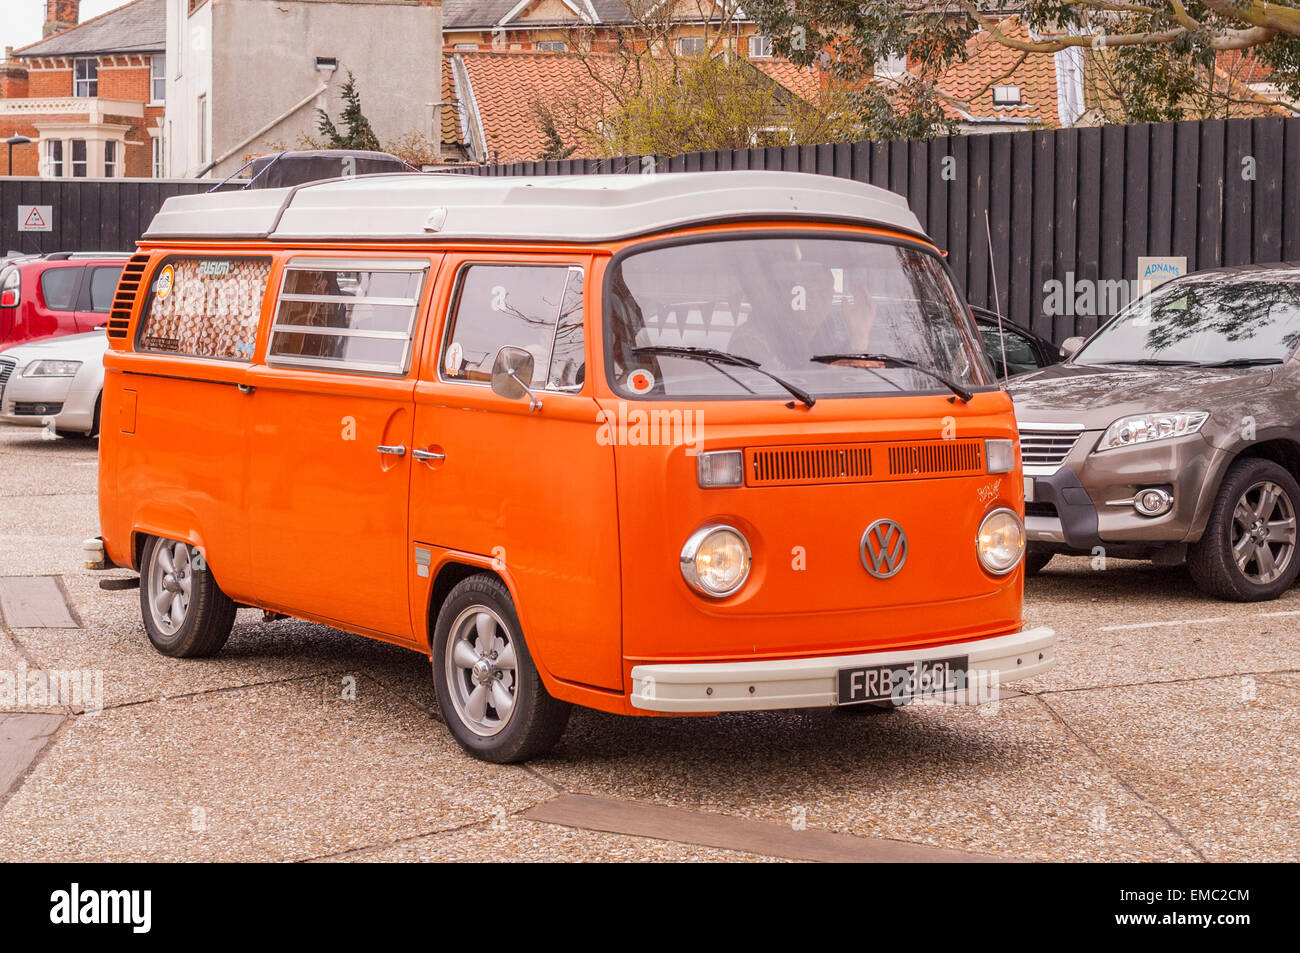 A classic VW campervan in orange in the Uk Stock Photo